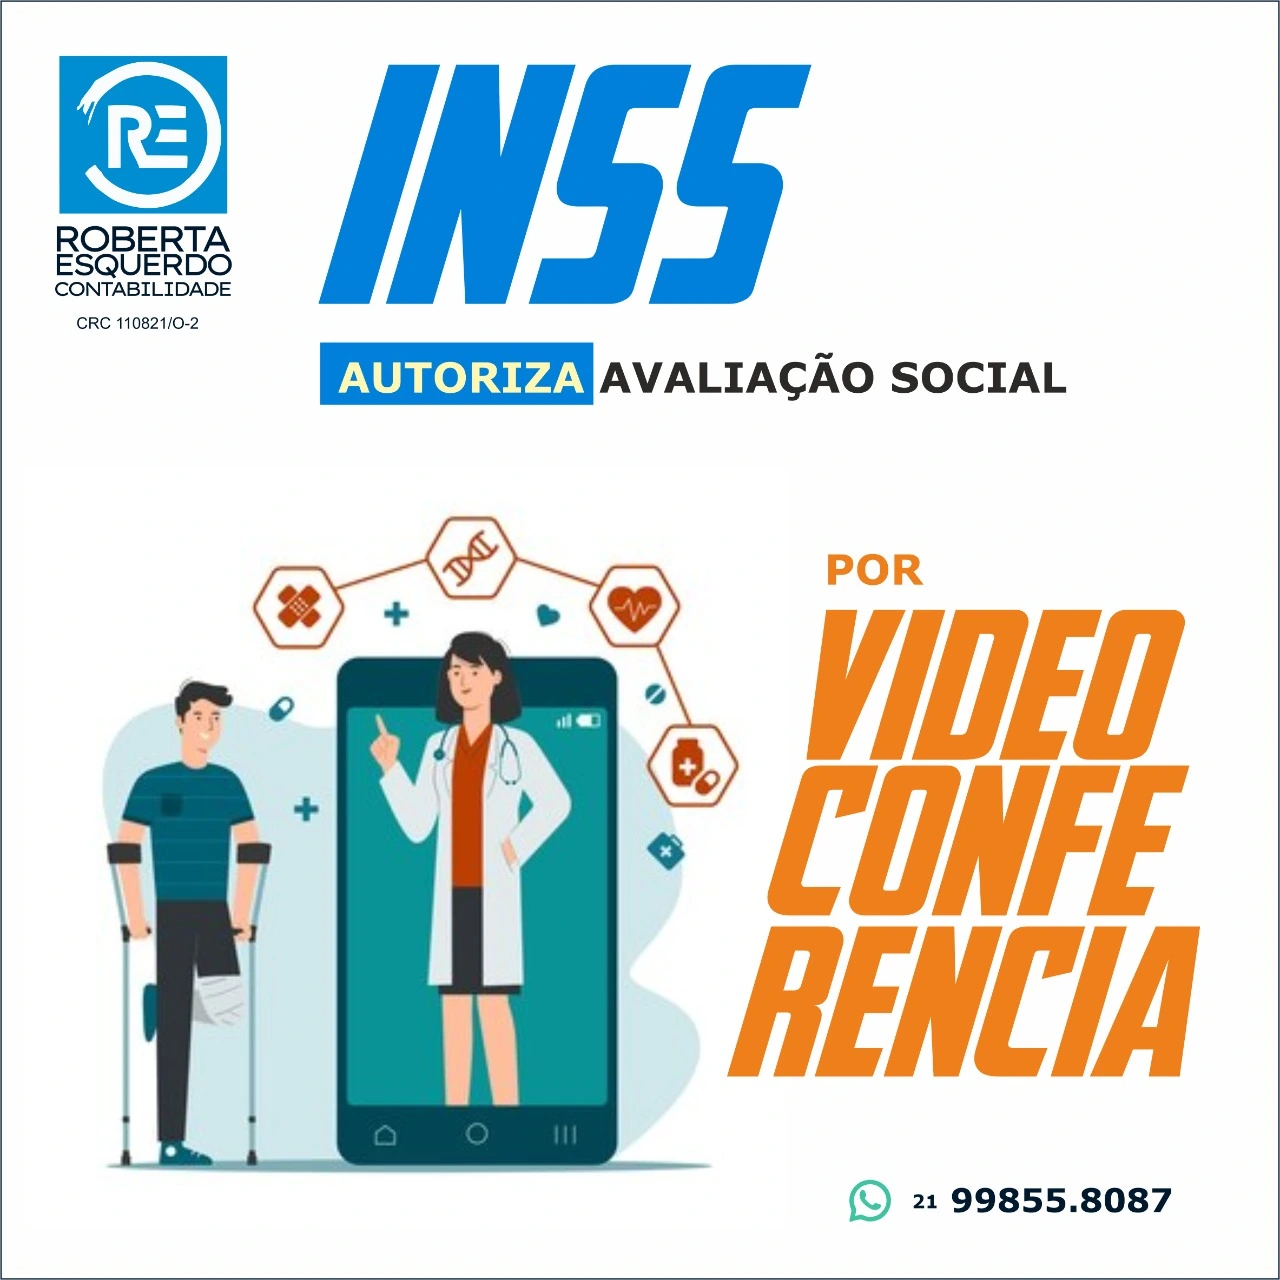 
Propaganda sobre INSS por videoconferência criado para Contador



